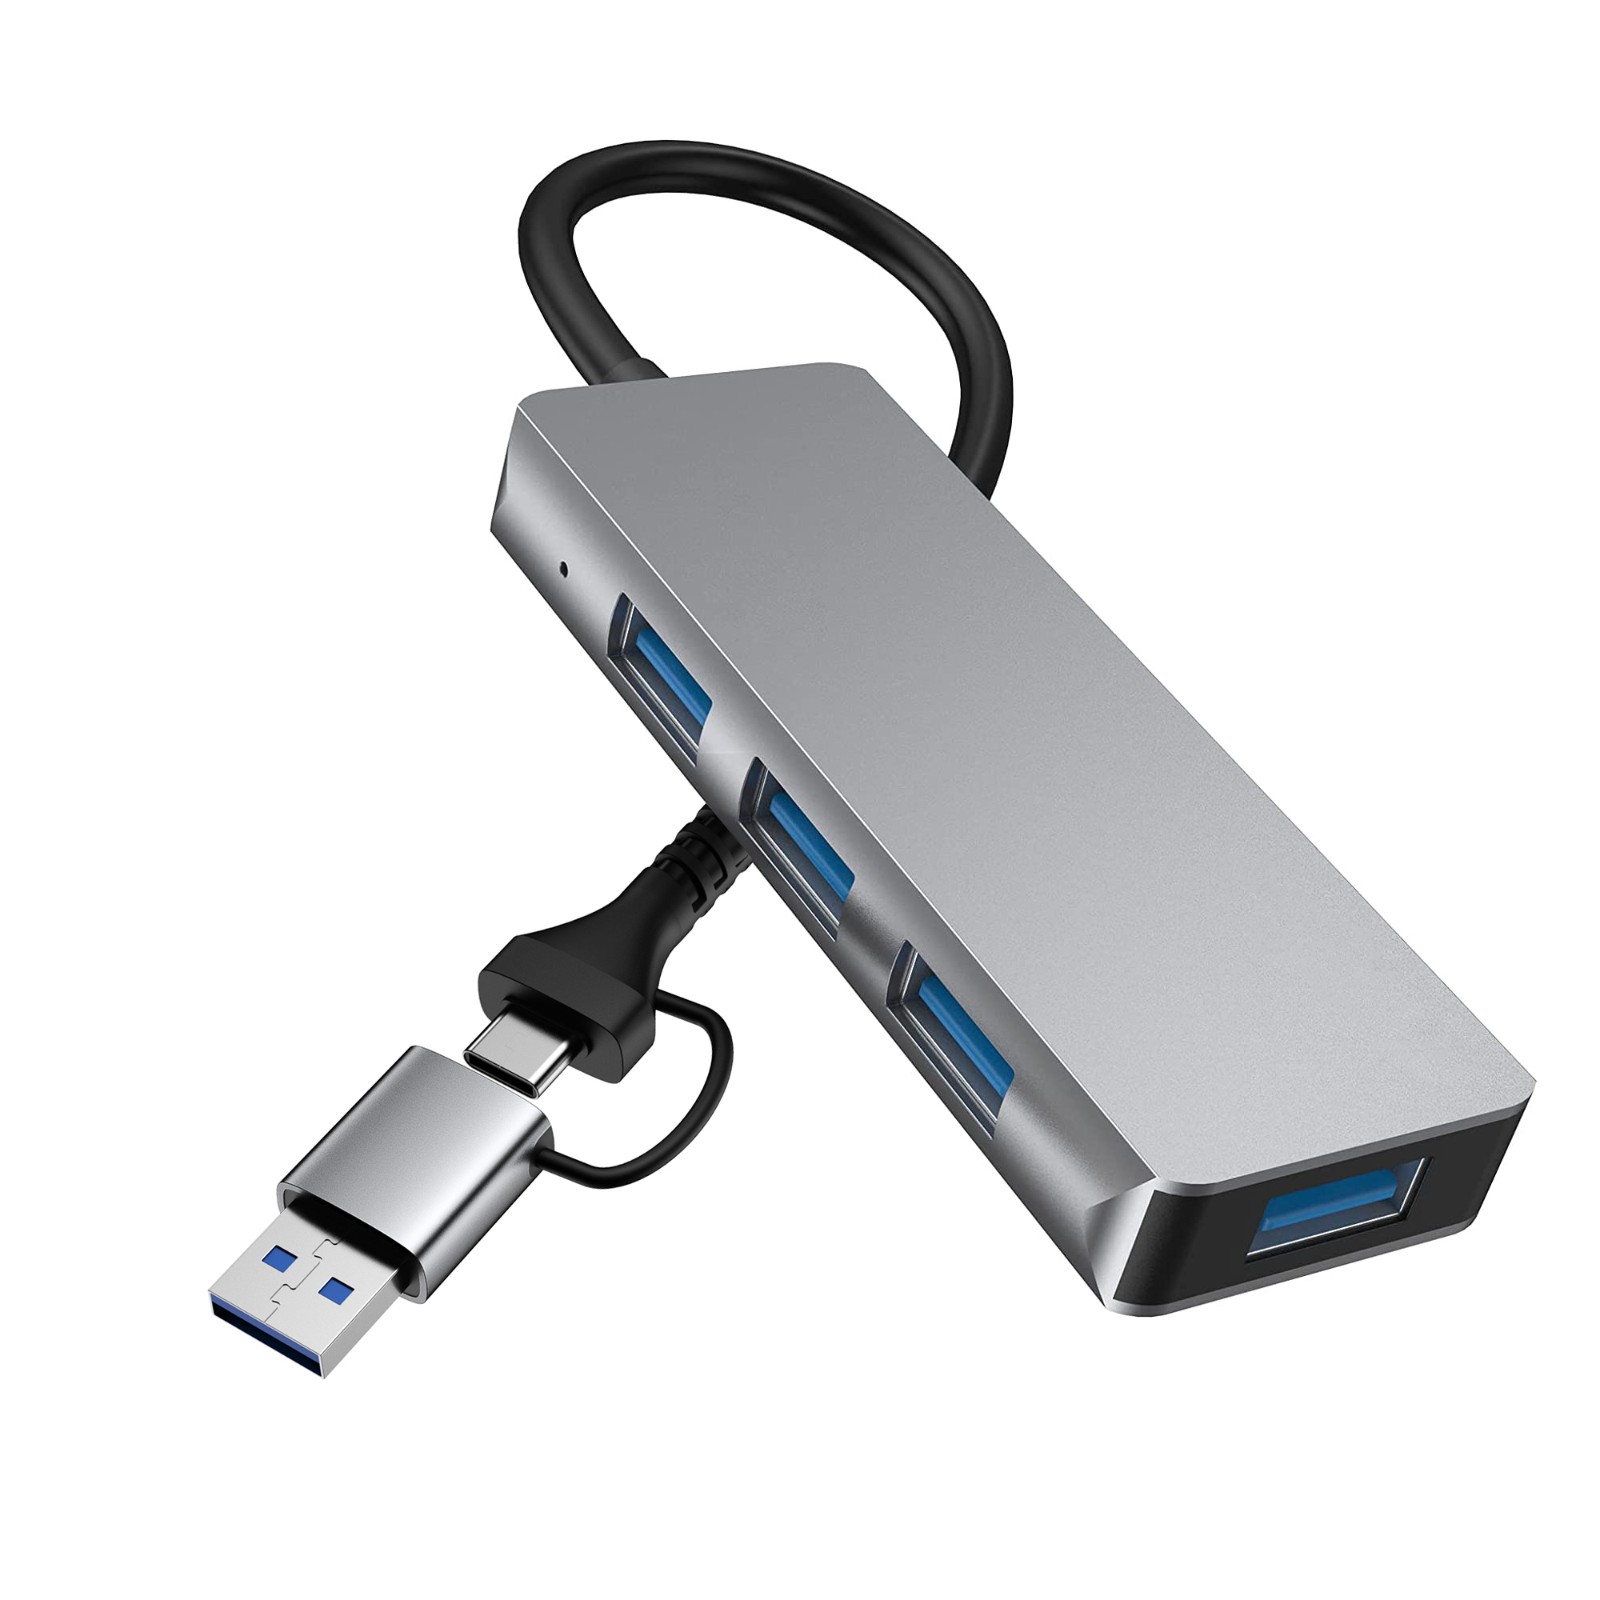  2in1 Aluminum USB 3.0 Hub 4ports